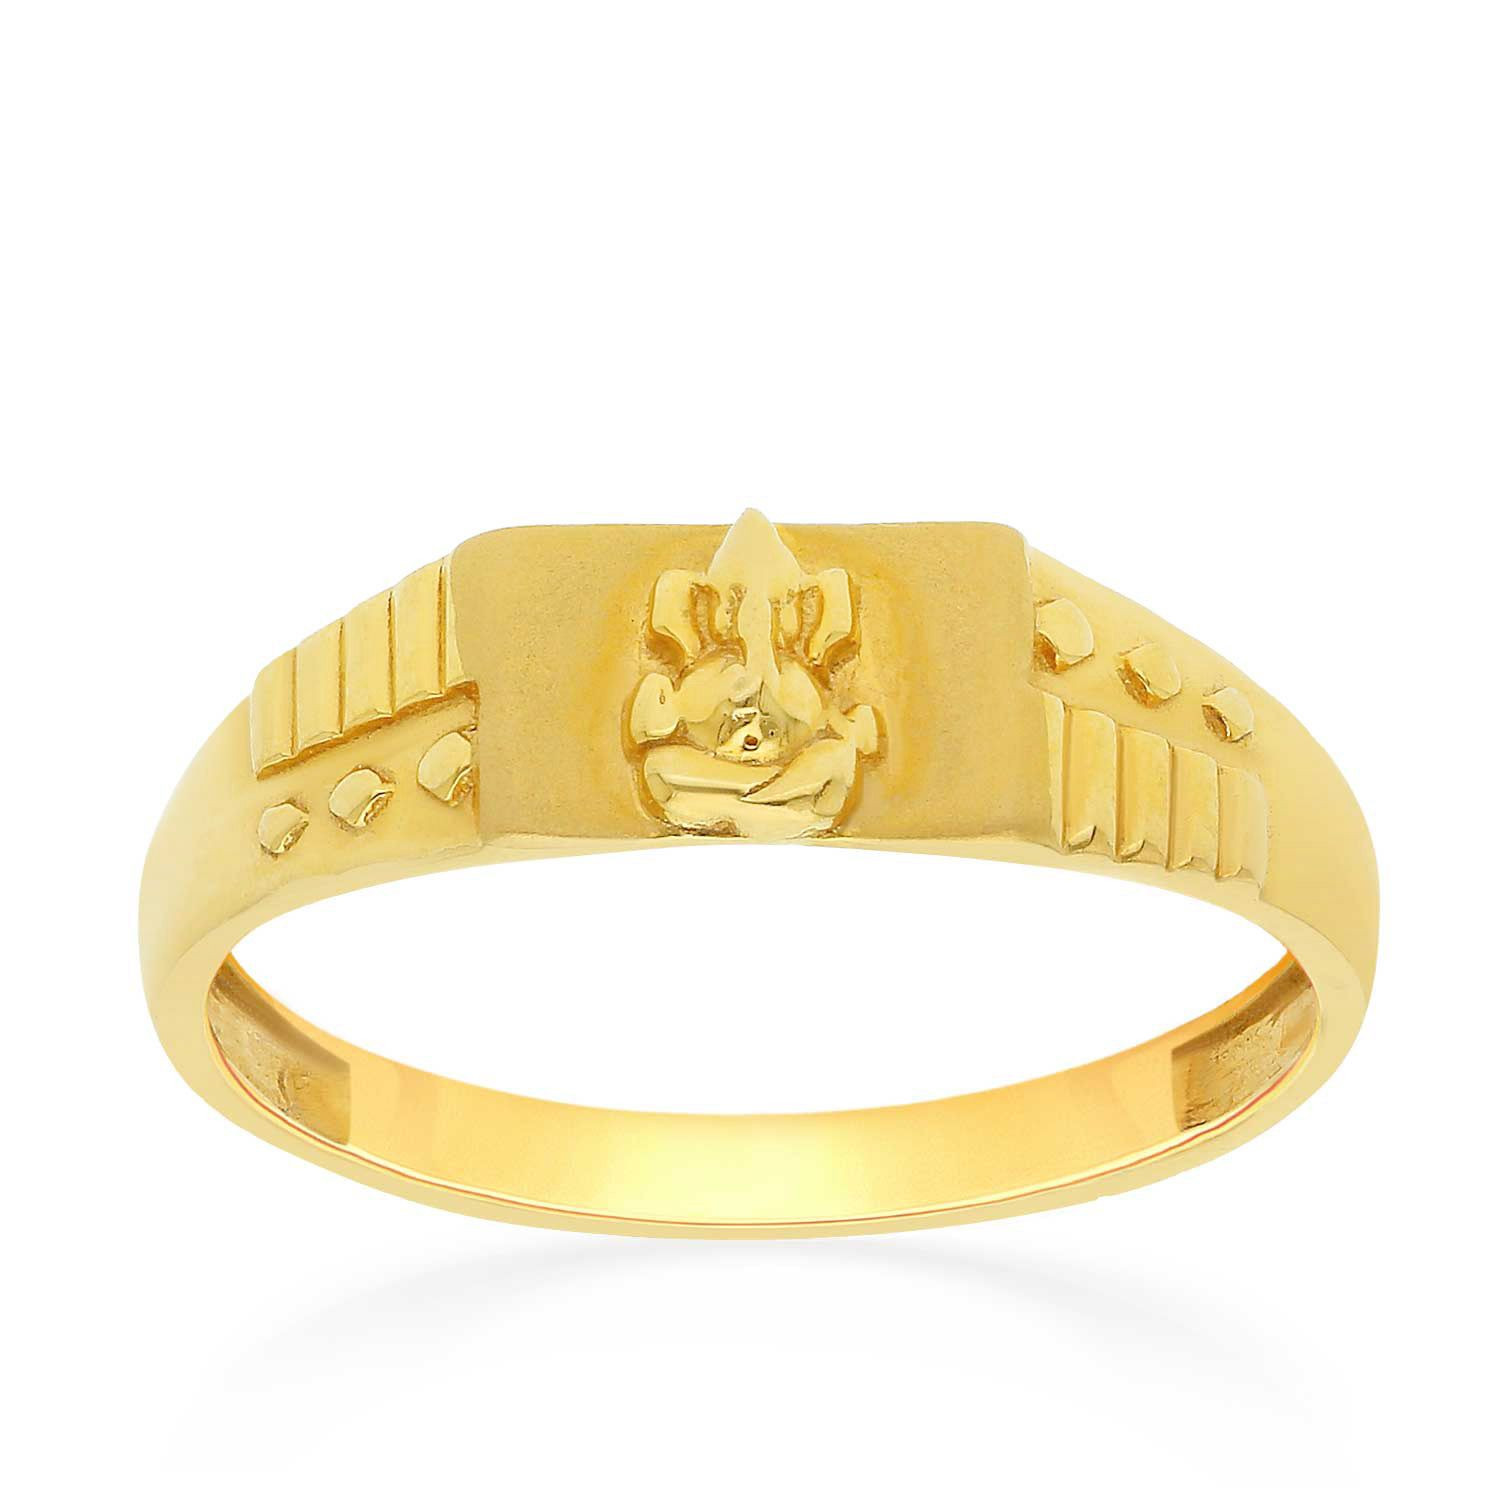 Buy Malabar Gold Ring FAMAAAAAFQFI for Men Online | Malabar Gold & Diamonds